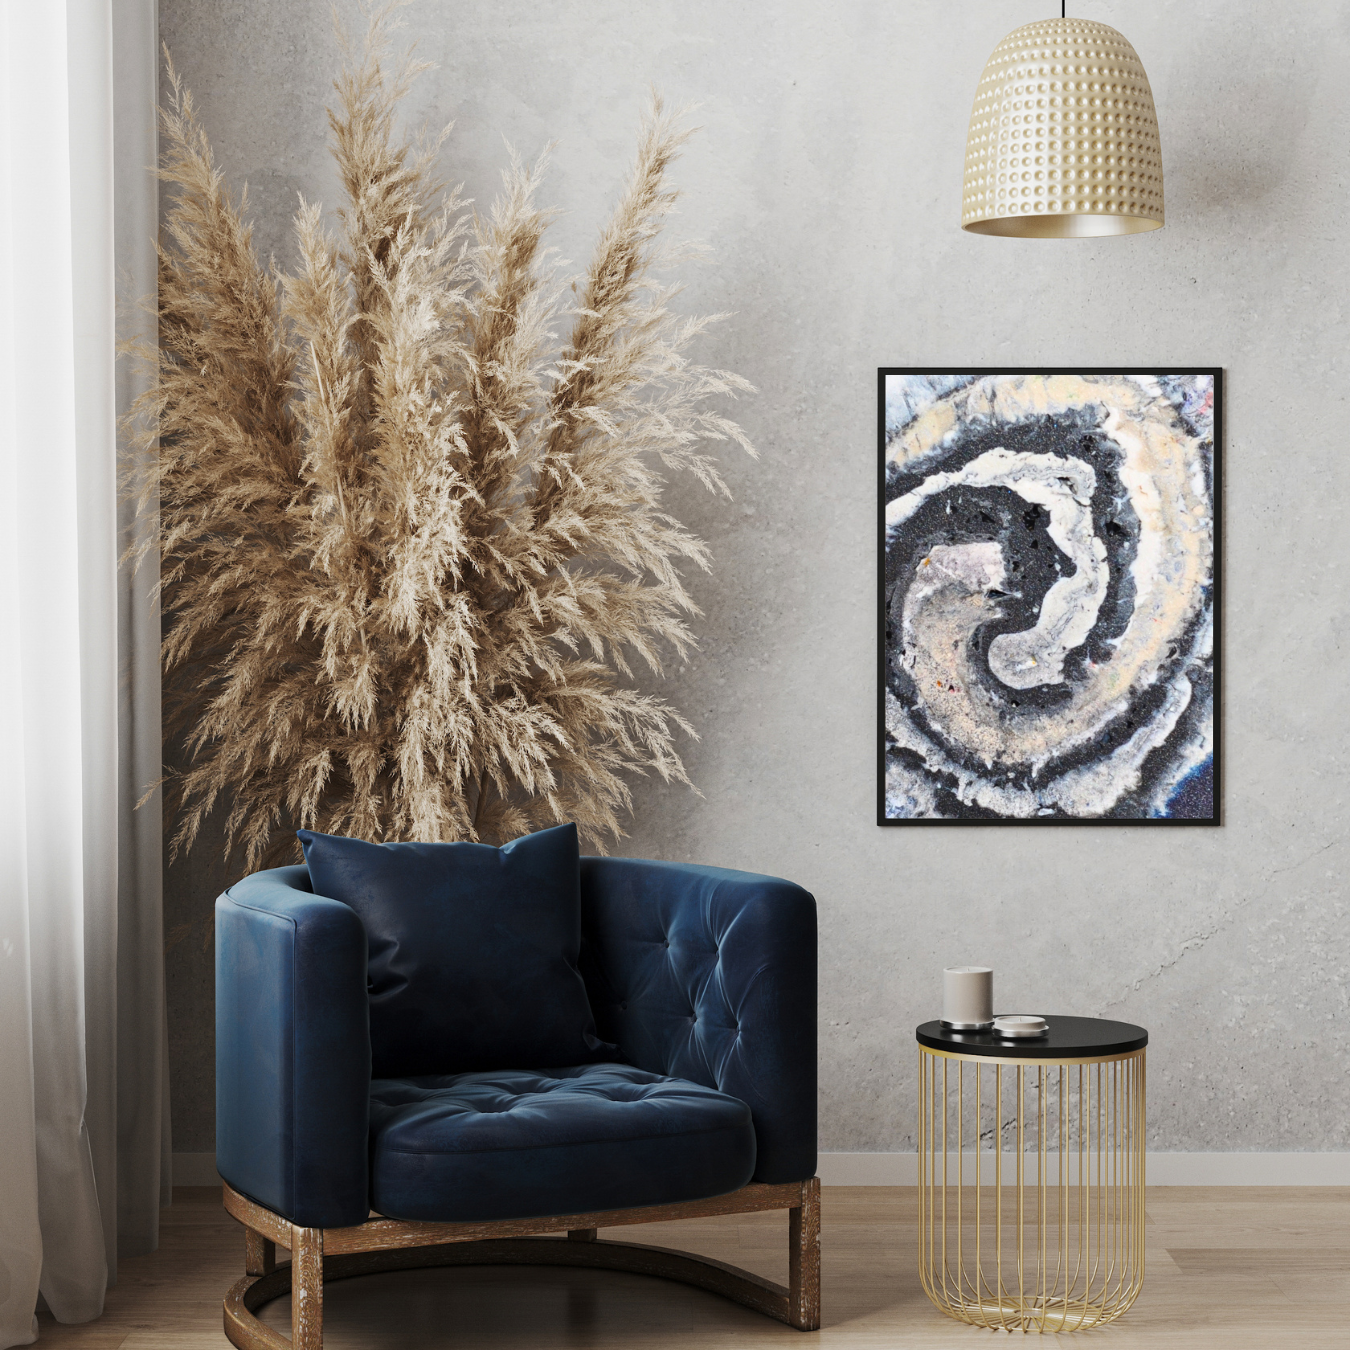 Spiral Digital Wall Art by Jagoda Jay Sudak Keshani printable wall decor nft pdf digital download modern interior decoration black white blue abstract art